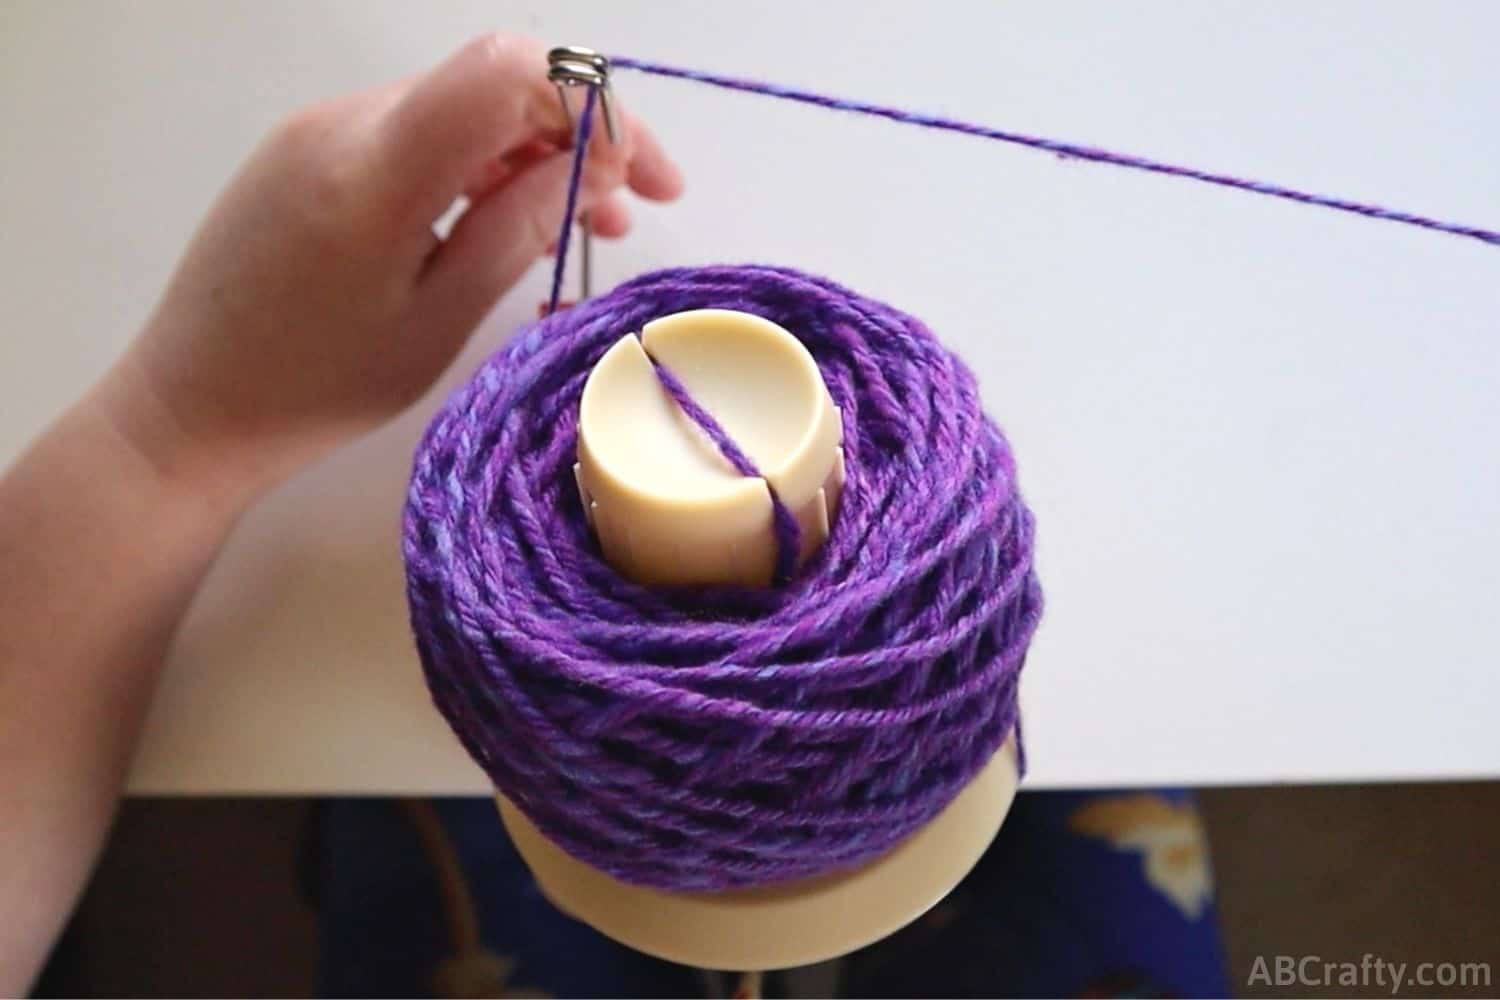 Knit Picks Yarn Ball Winder